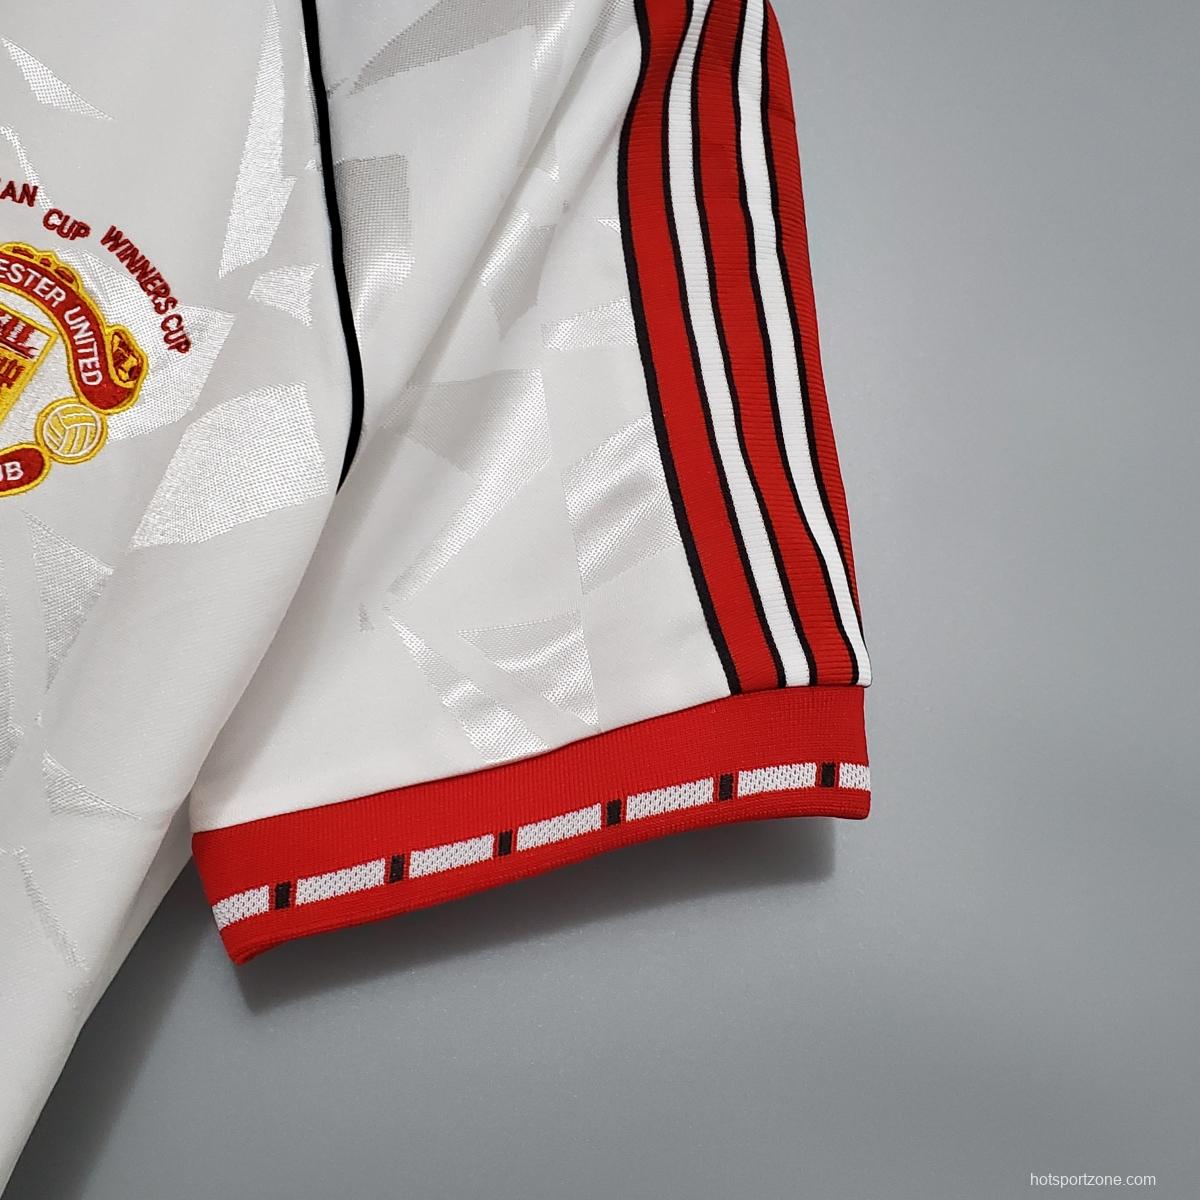 Retro 1991 Manchester United white Soccer Jersey